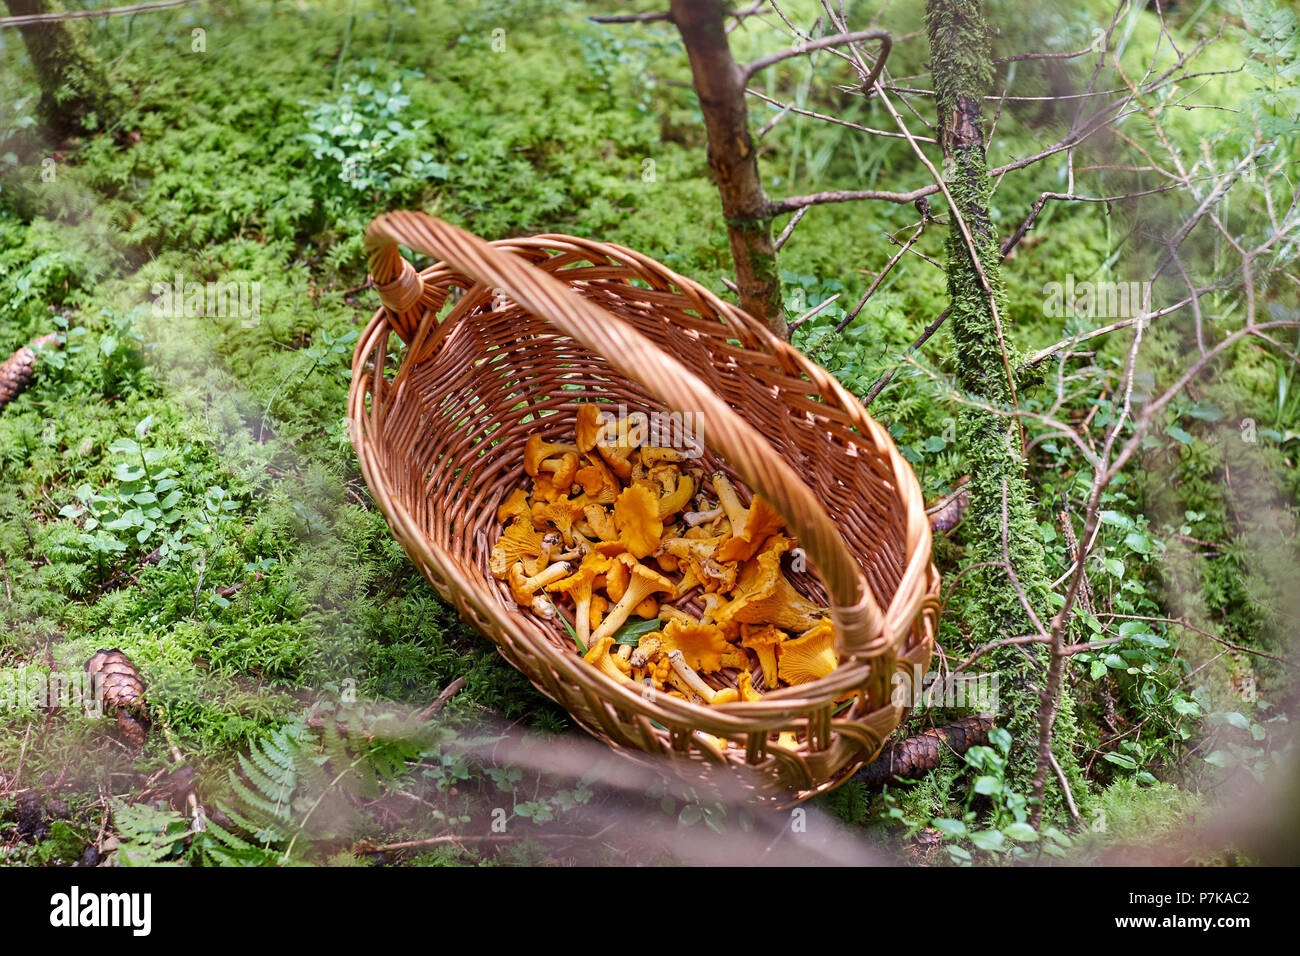 Basket of mushrooms chanterelles on forest floor Stock Photo